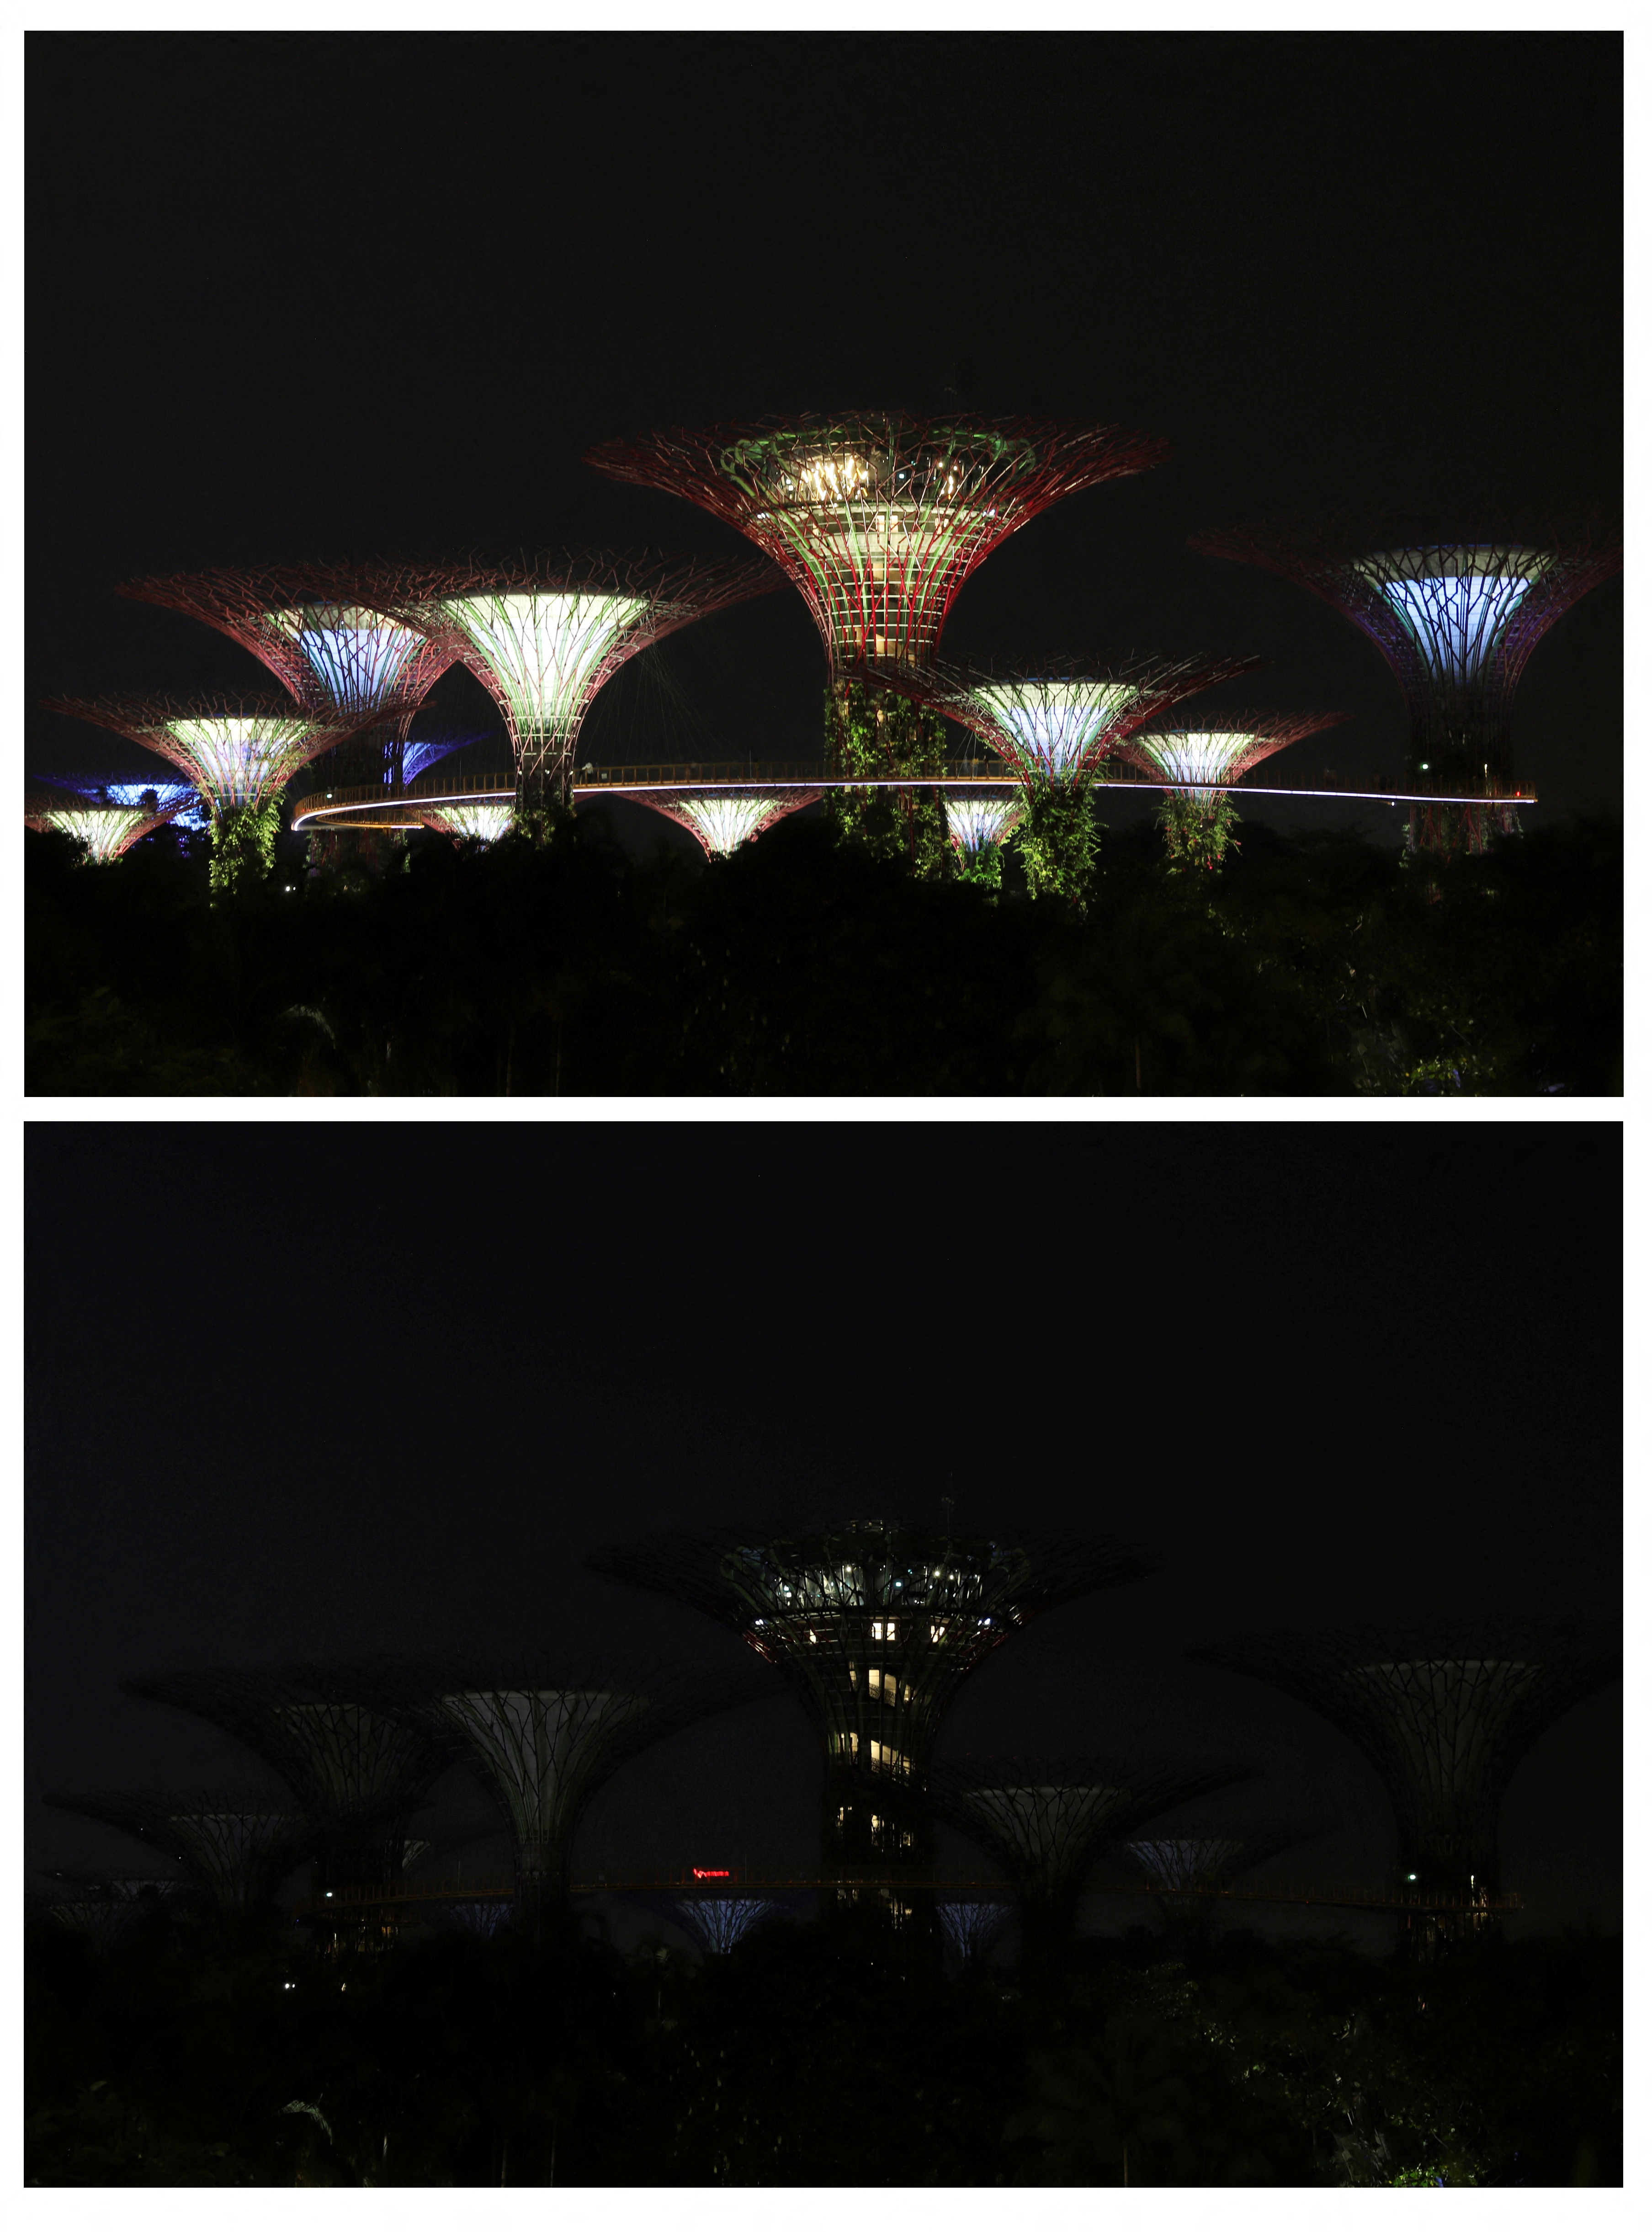 Singapore's gardens also darkened (Reuters / Isabel Kwa)